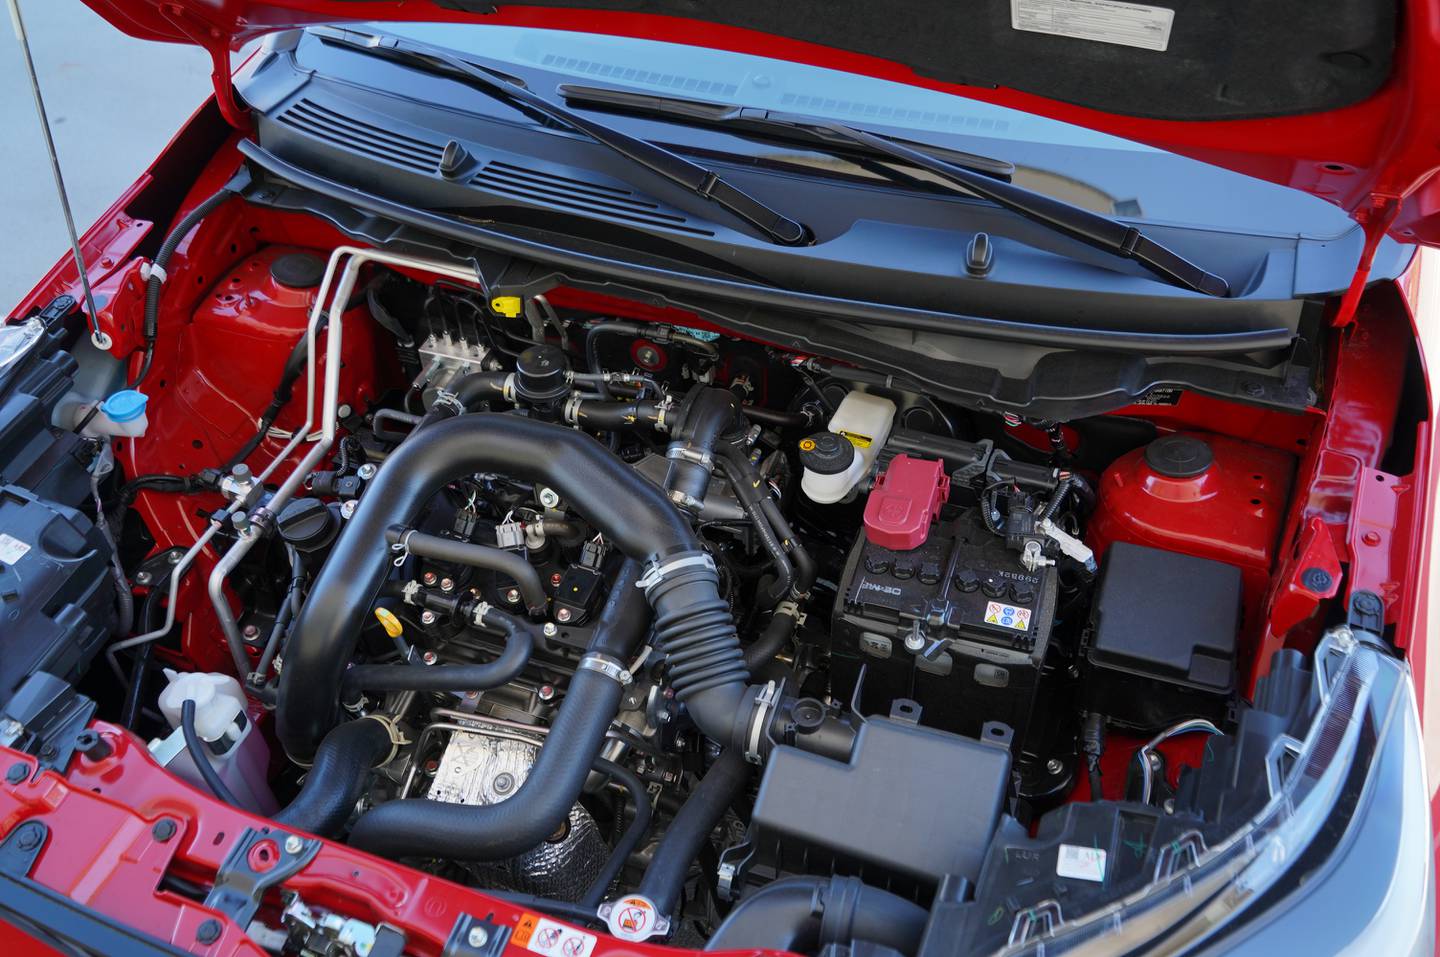 Toyota Raize engine